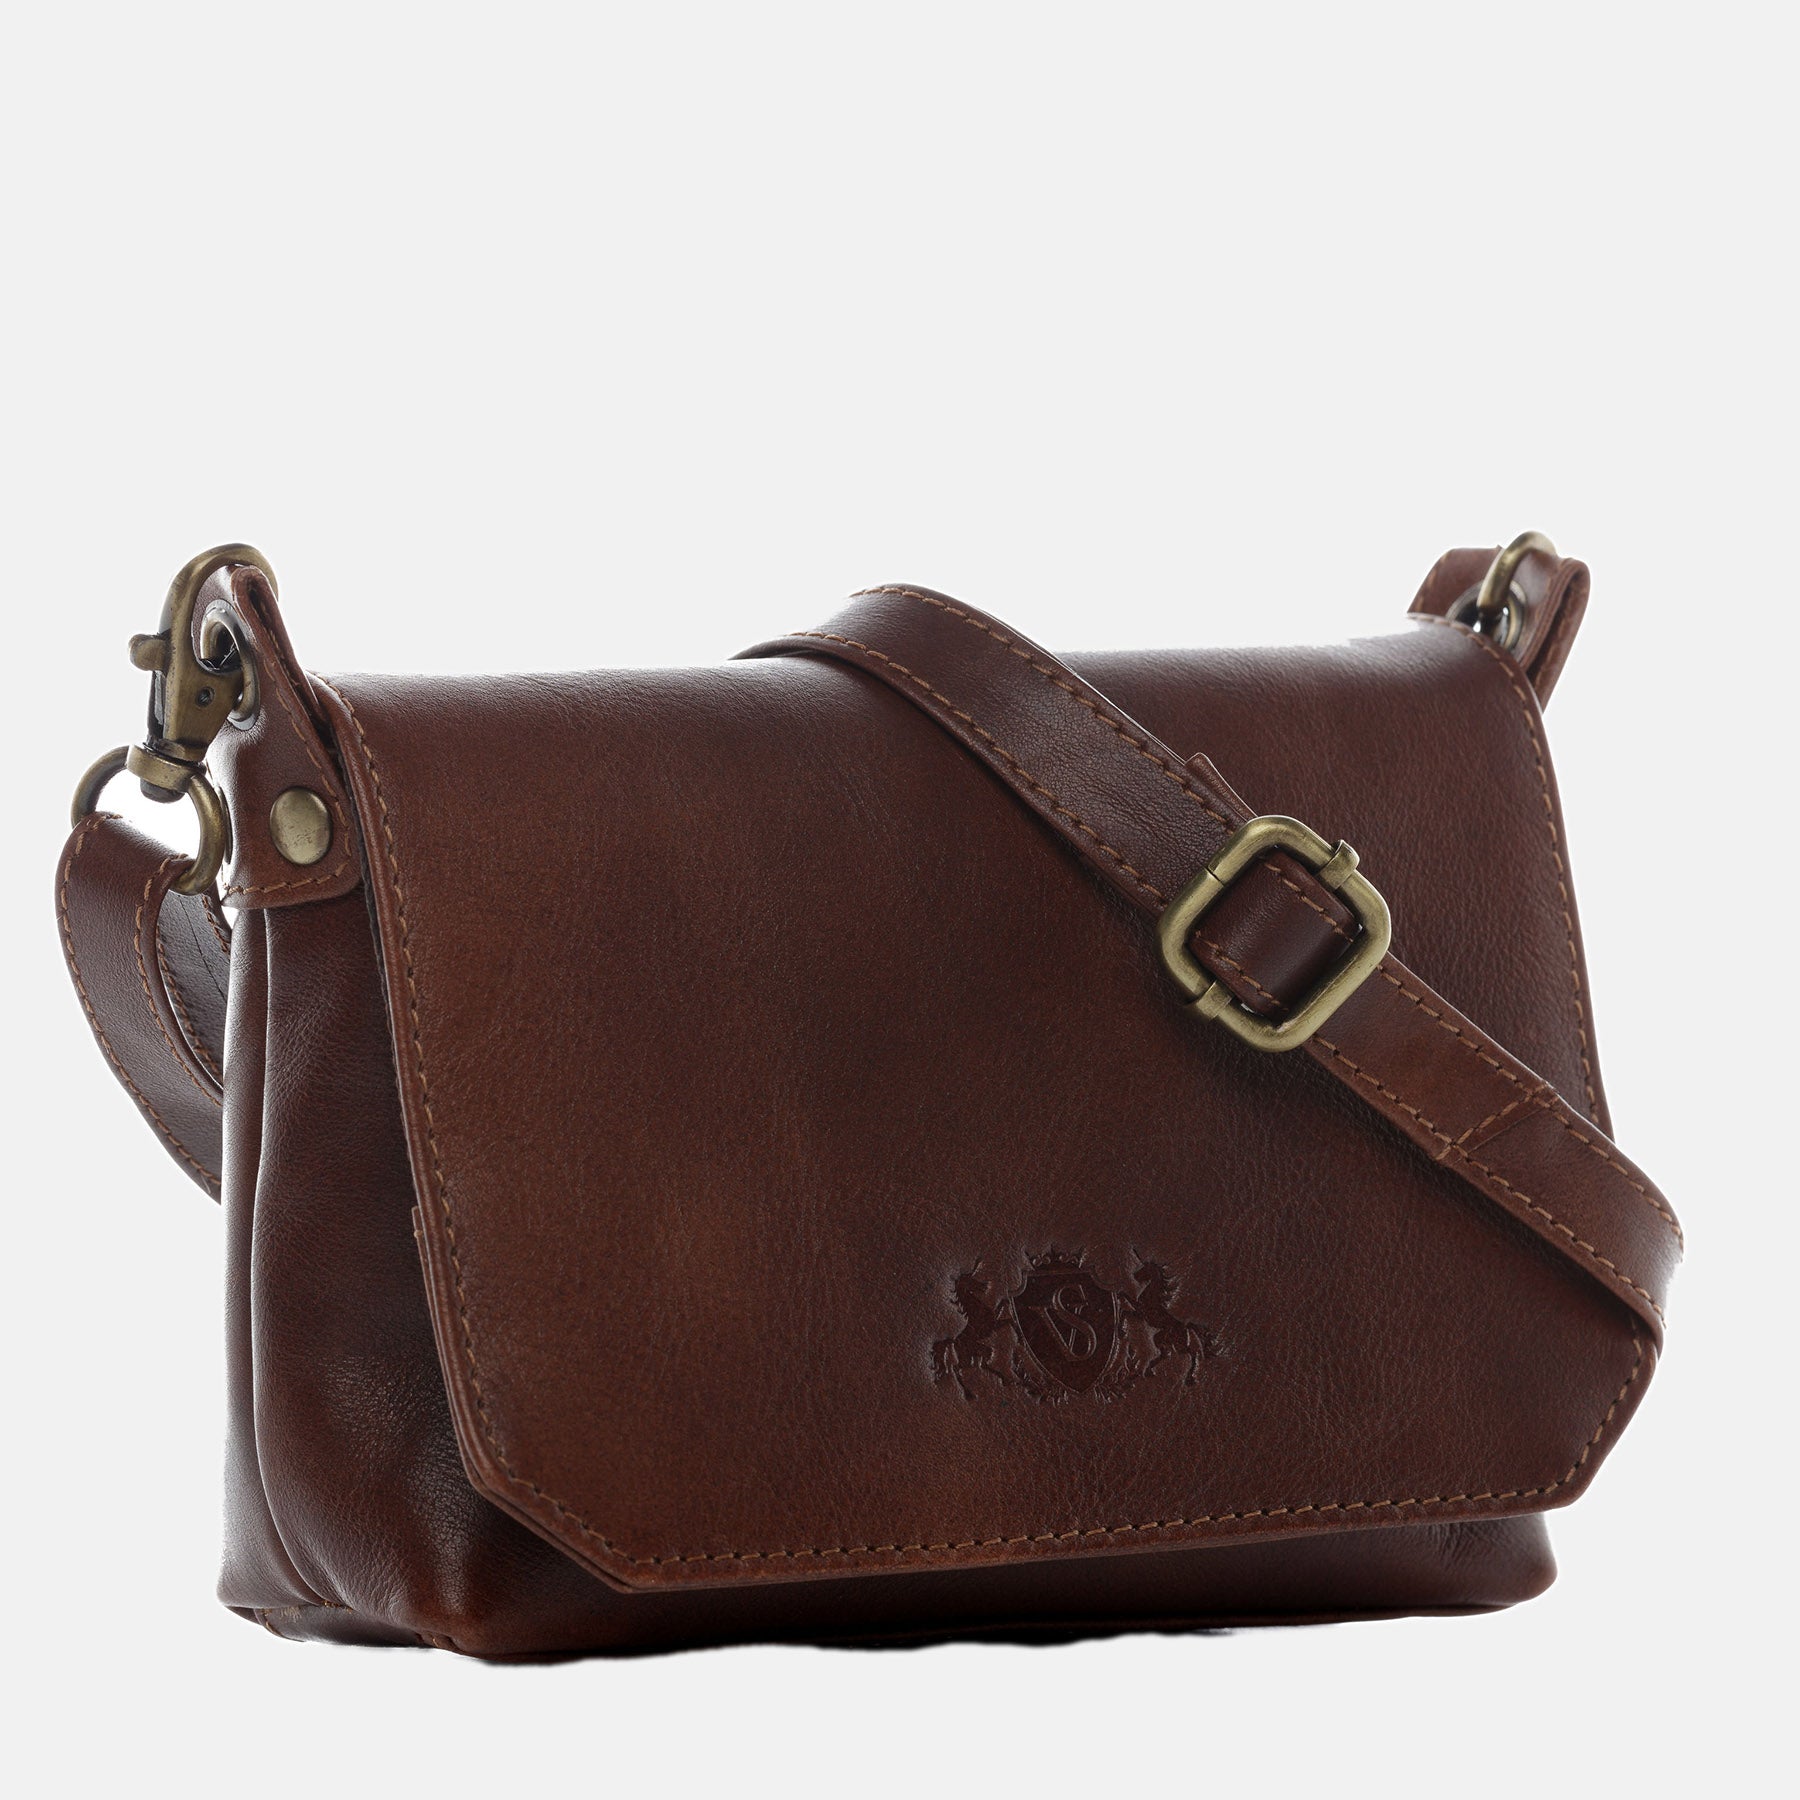 Shoulder bag KERBY smooth leather brown